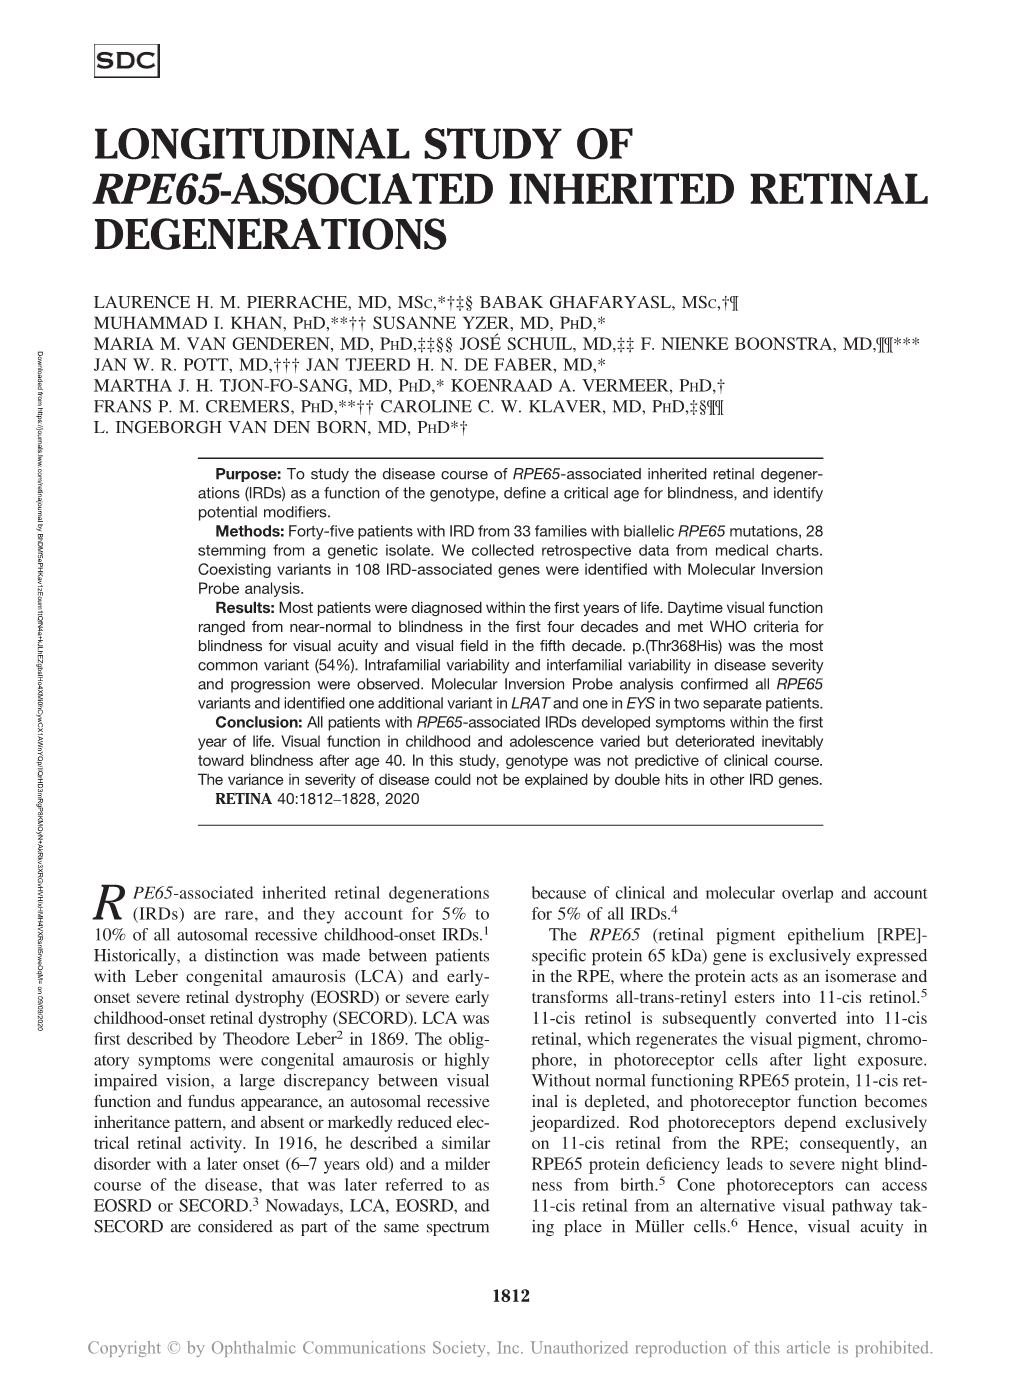 Longitudinal Study of Rpe65-Associated Inherited